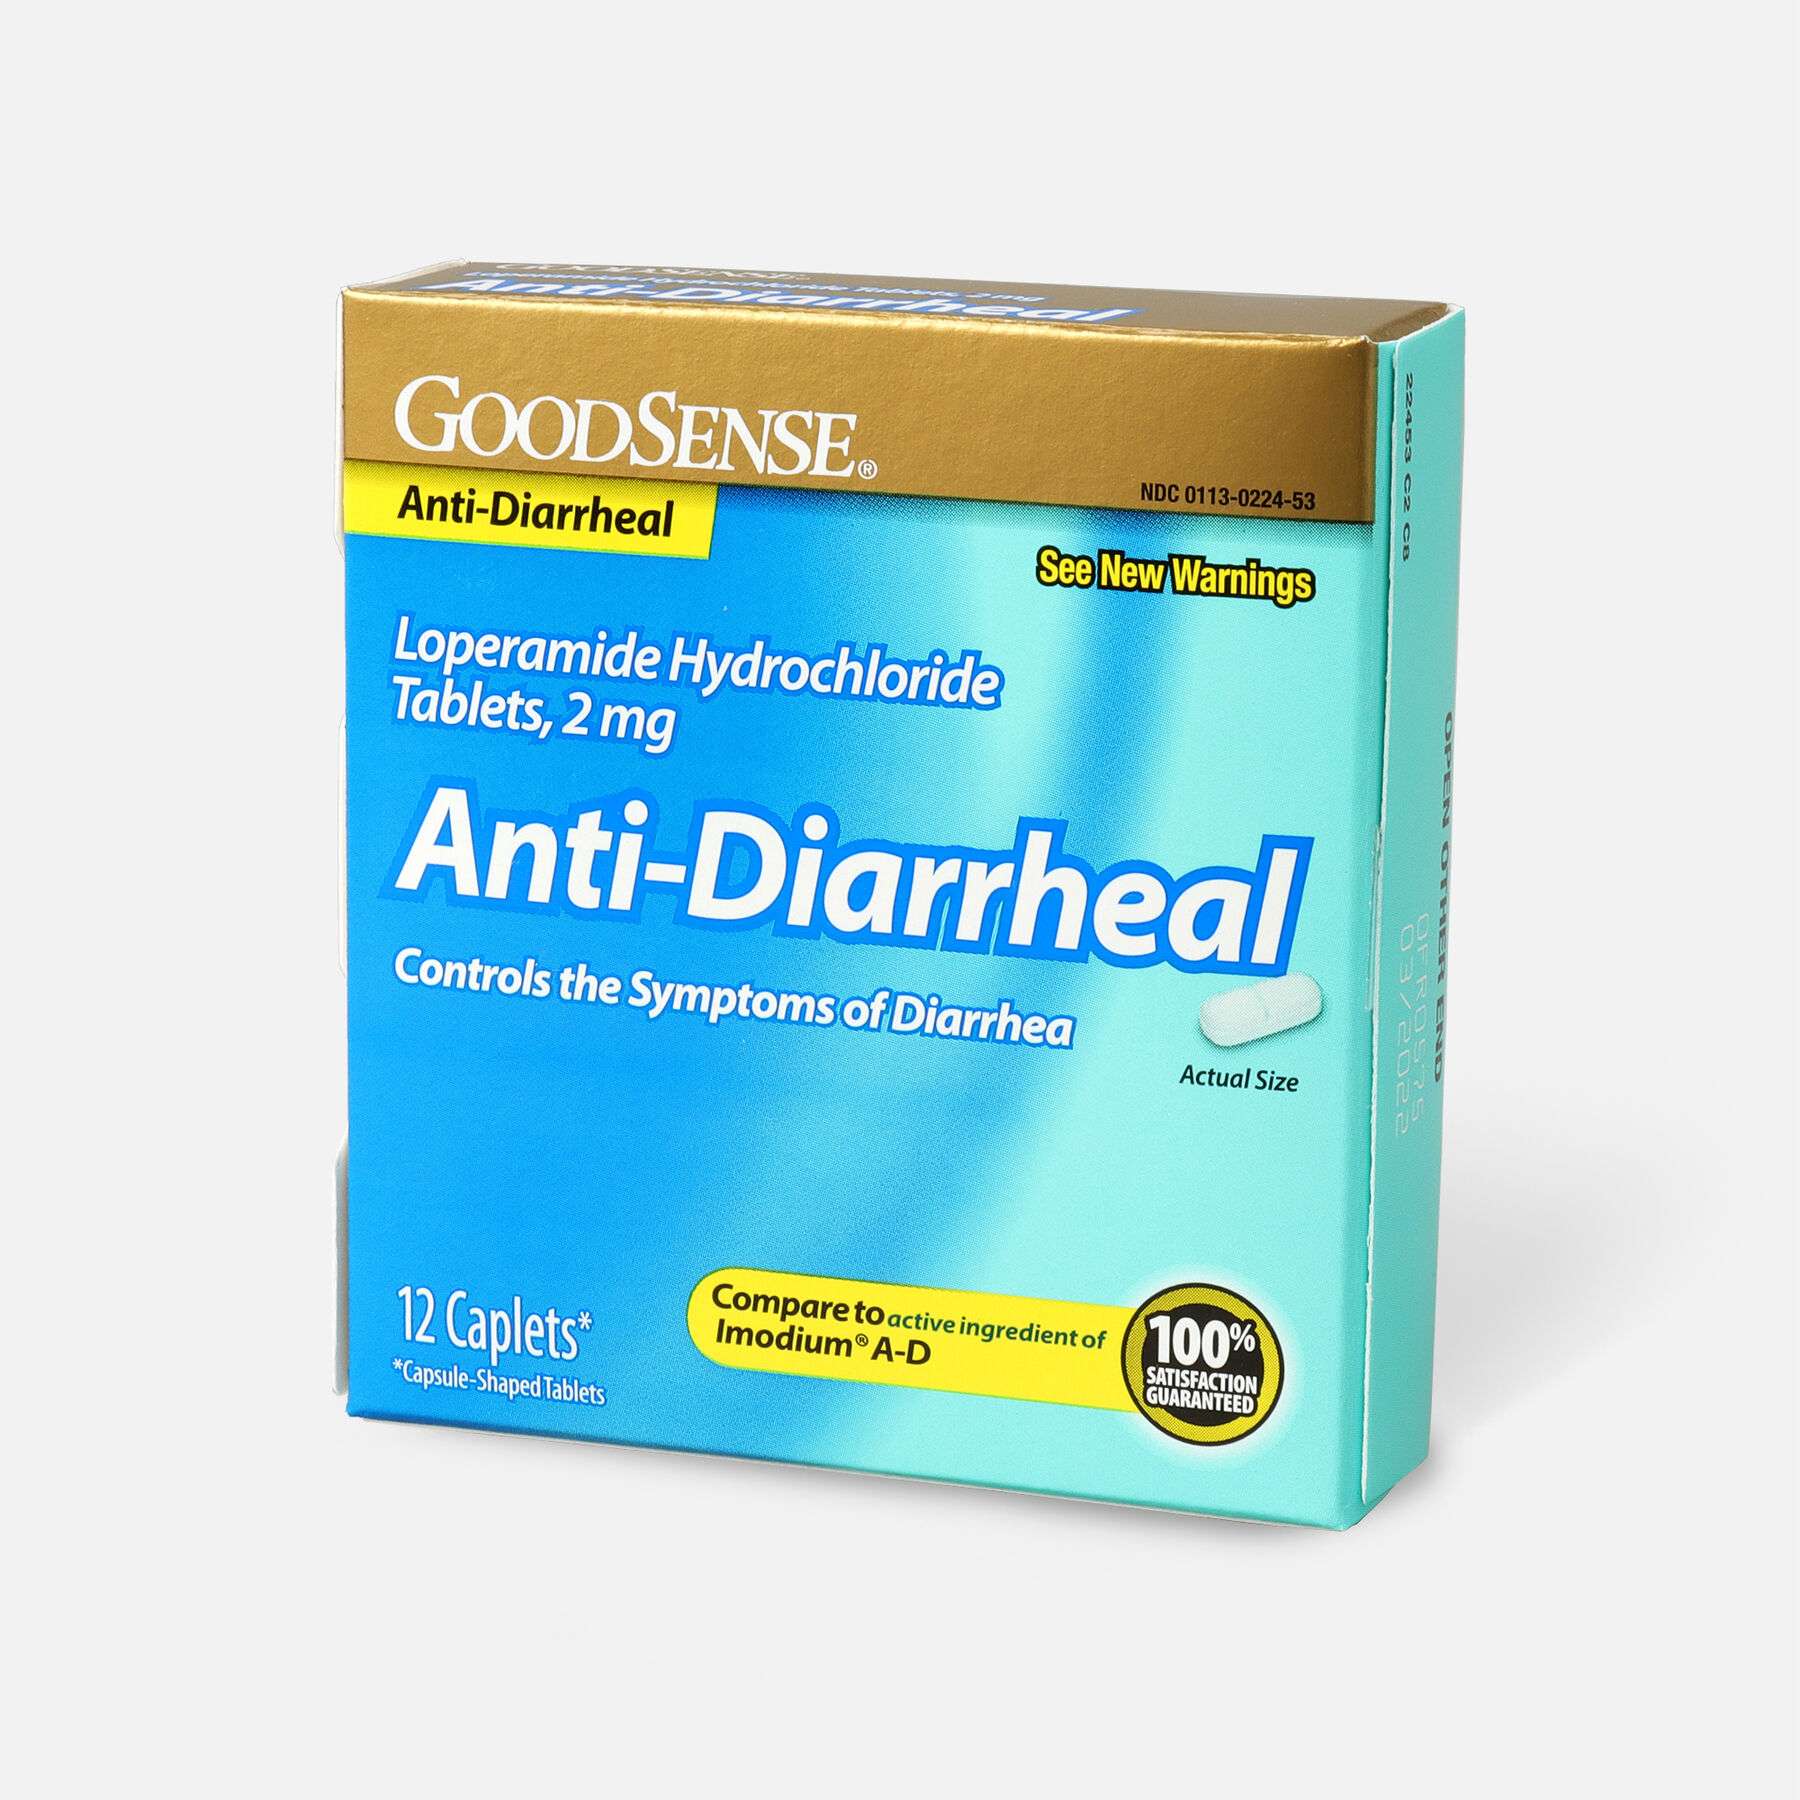 GoodSense® Loperamide HCl 2 mg Anti